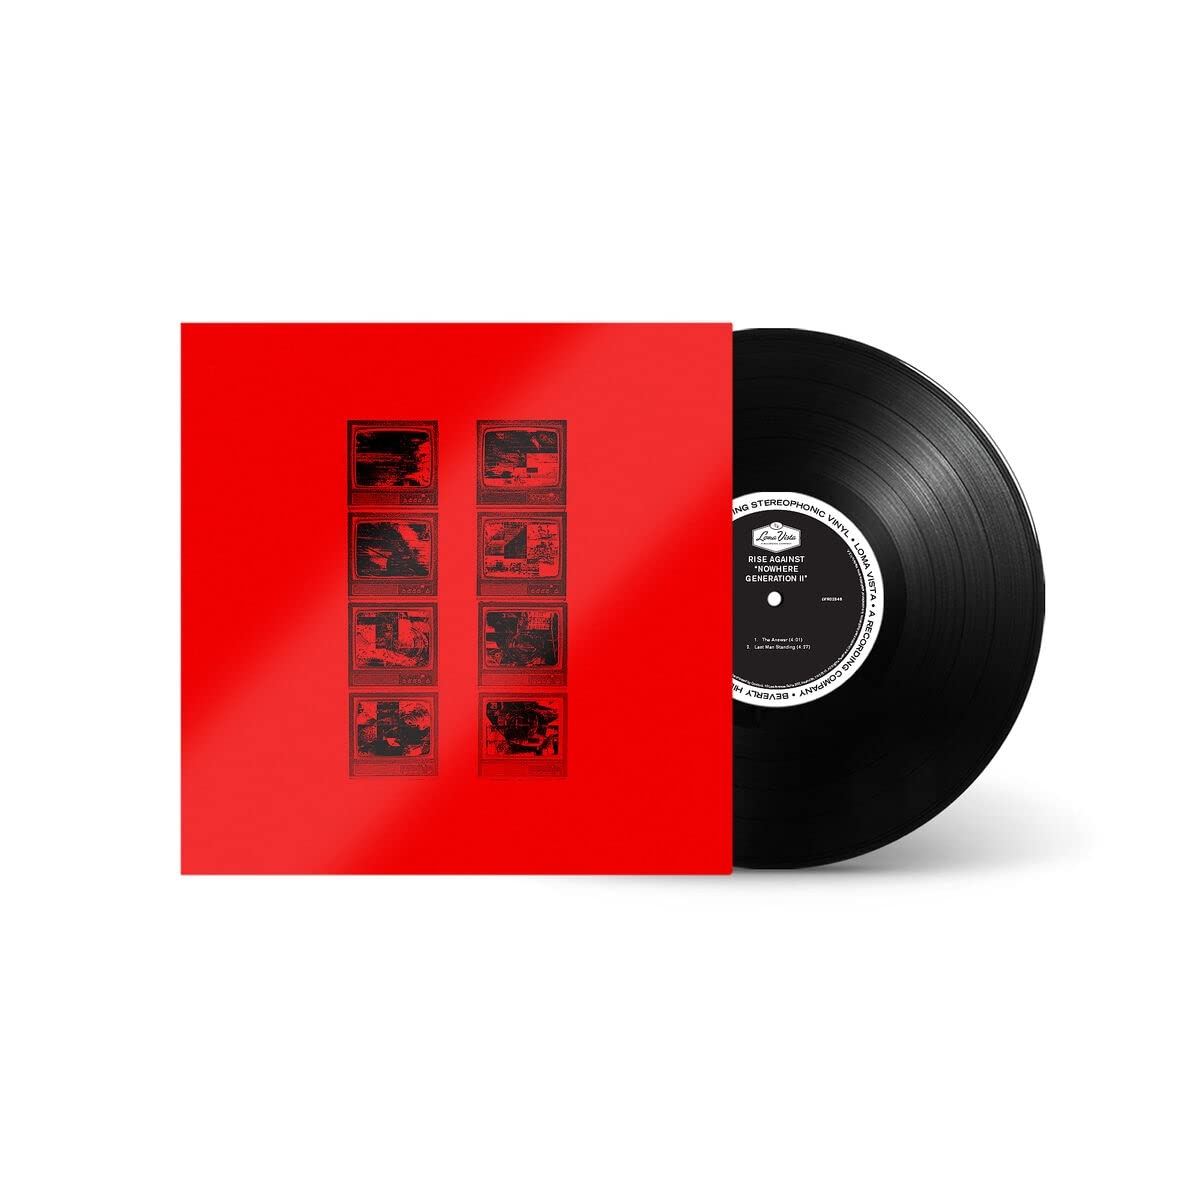 Rise Against - Nowhere Generation II (10" EP) - Vinyl - New